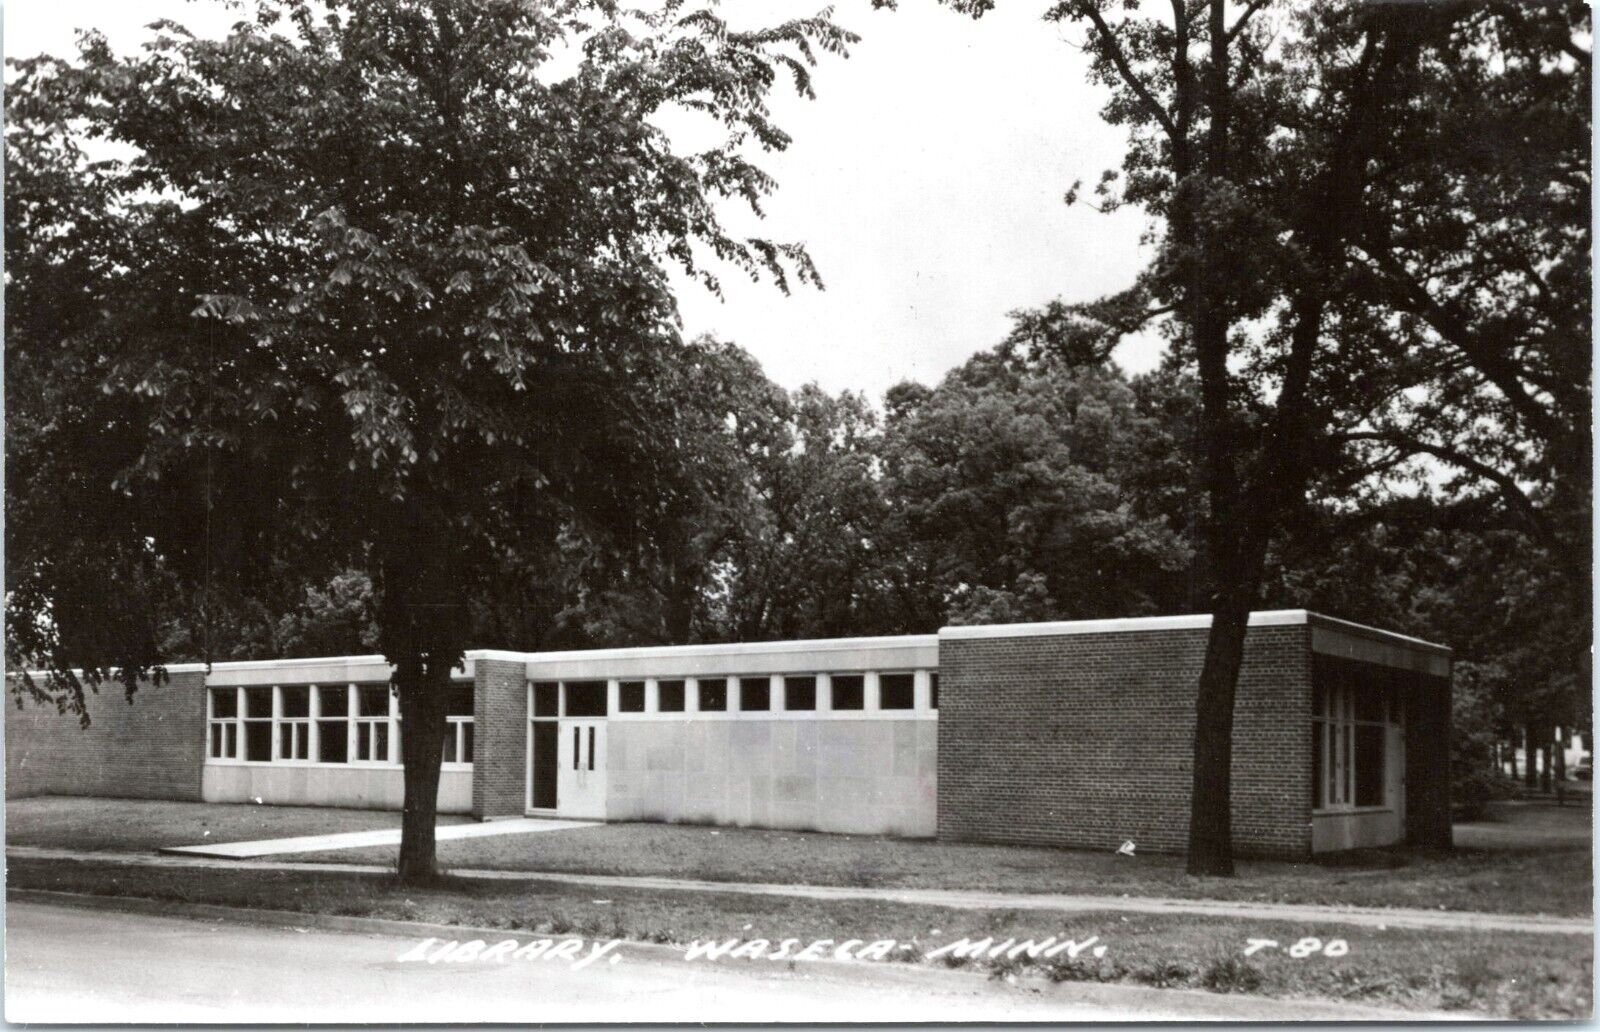 RPPC Waseca Le Sueur Library, Waseca, Minnesota - c1950s Photo Postcard